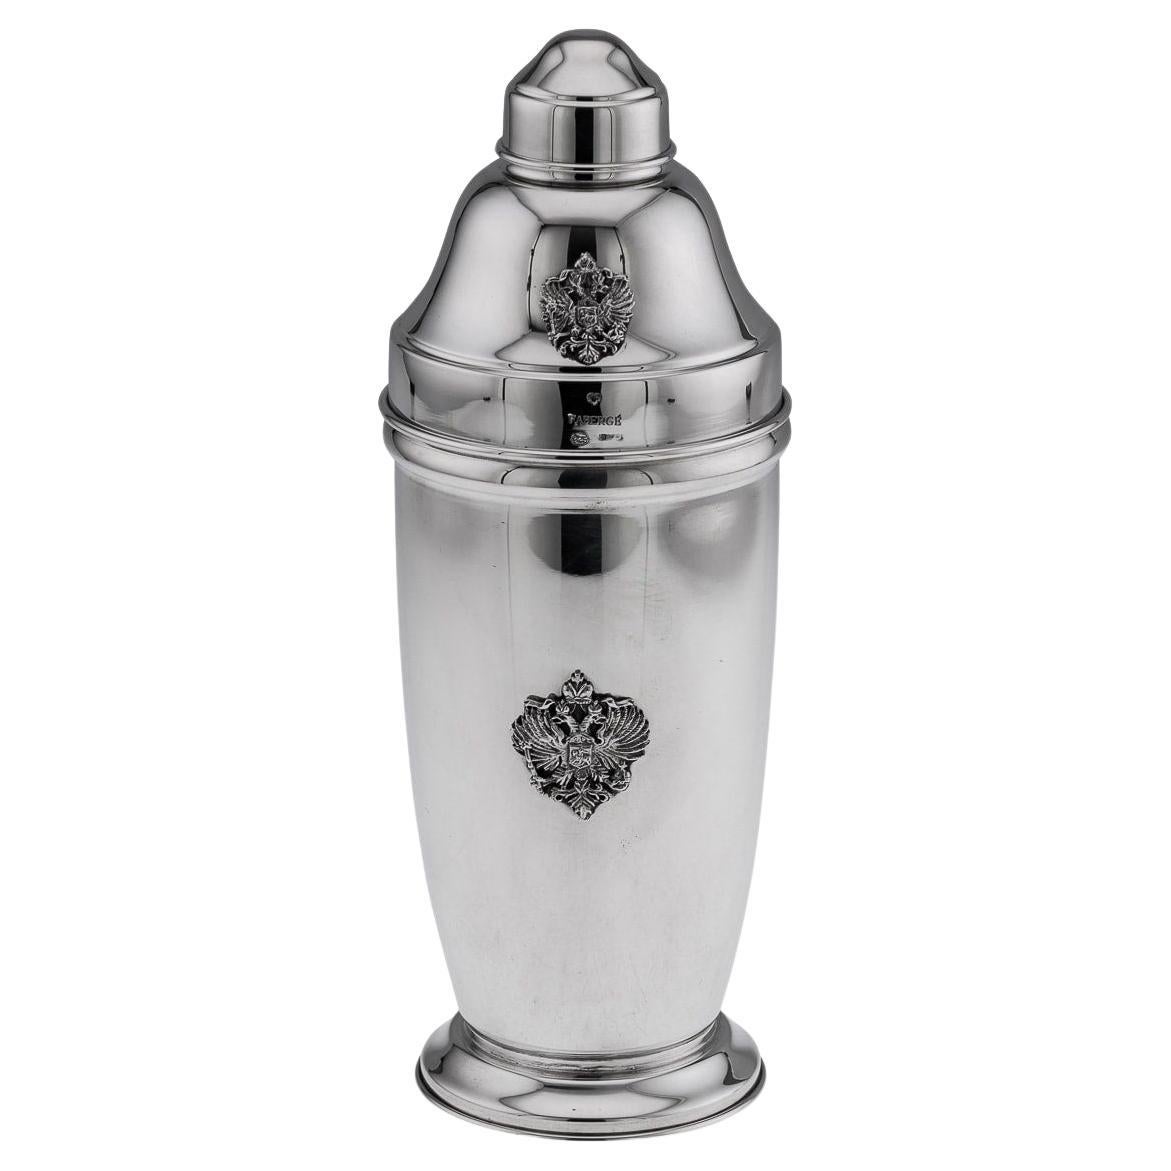 Superb Fabergé Solid Silver Cocktail Shaker